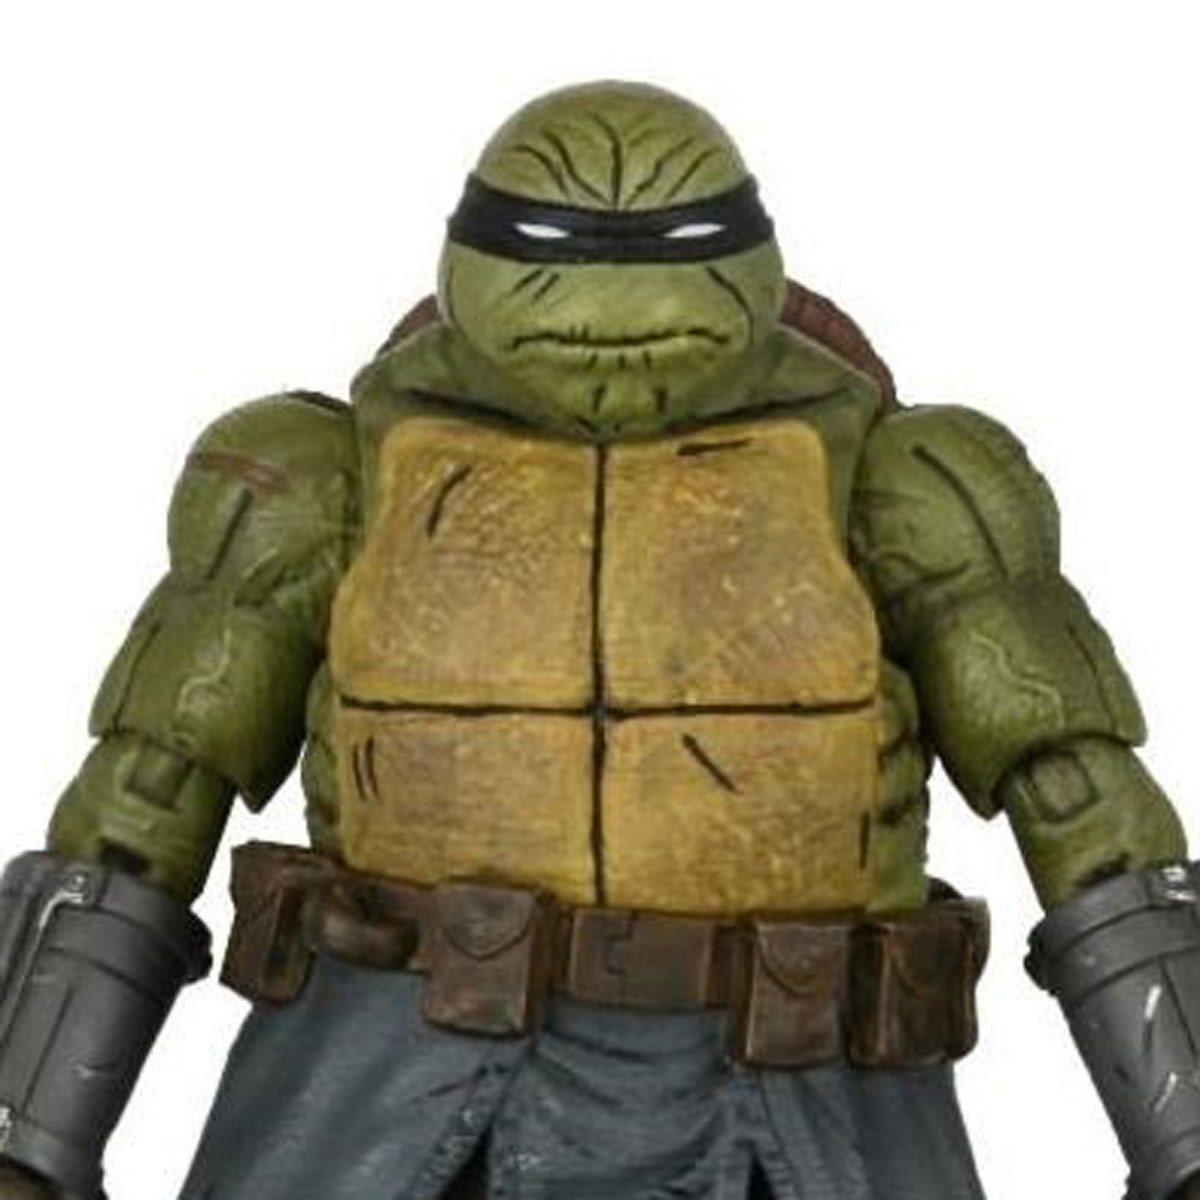 NECA Teenage Mutant Ninja Turtles 3 (Movie) - 7 inch Scale Action Figures - Leonardo & Michelangelo 2 Pack, Size: 7 Figures, Brown